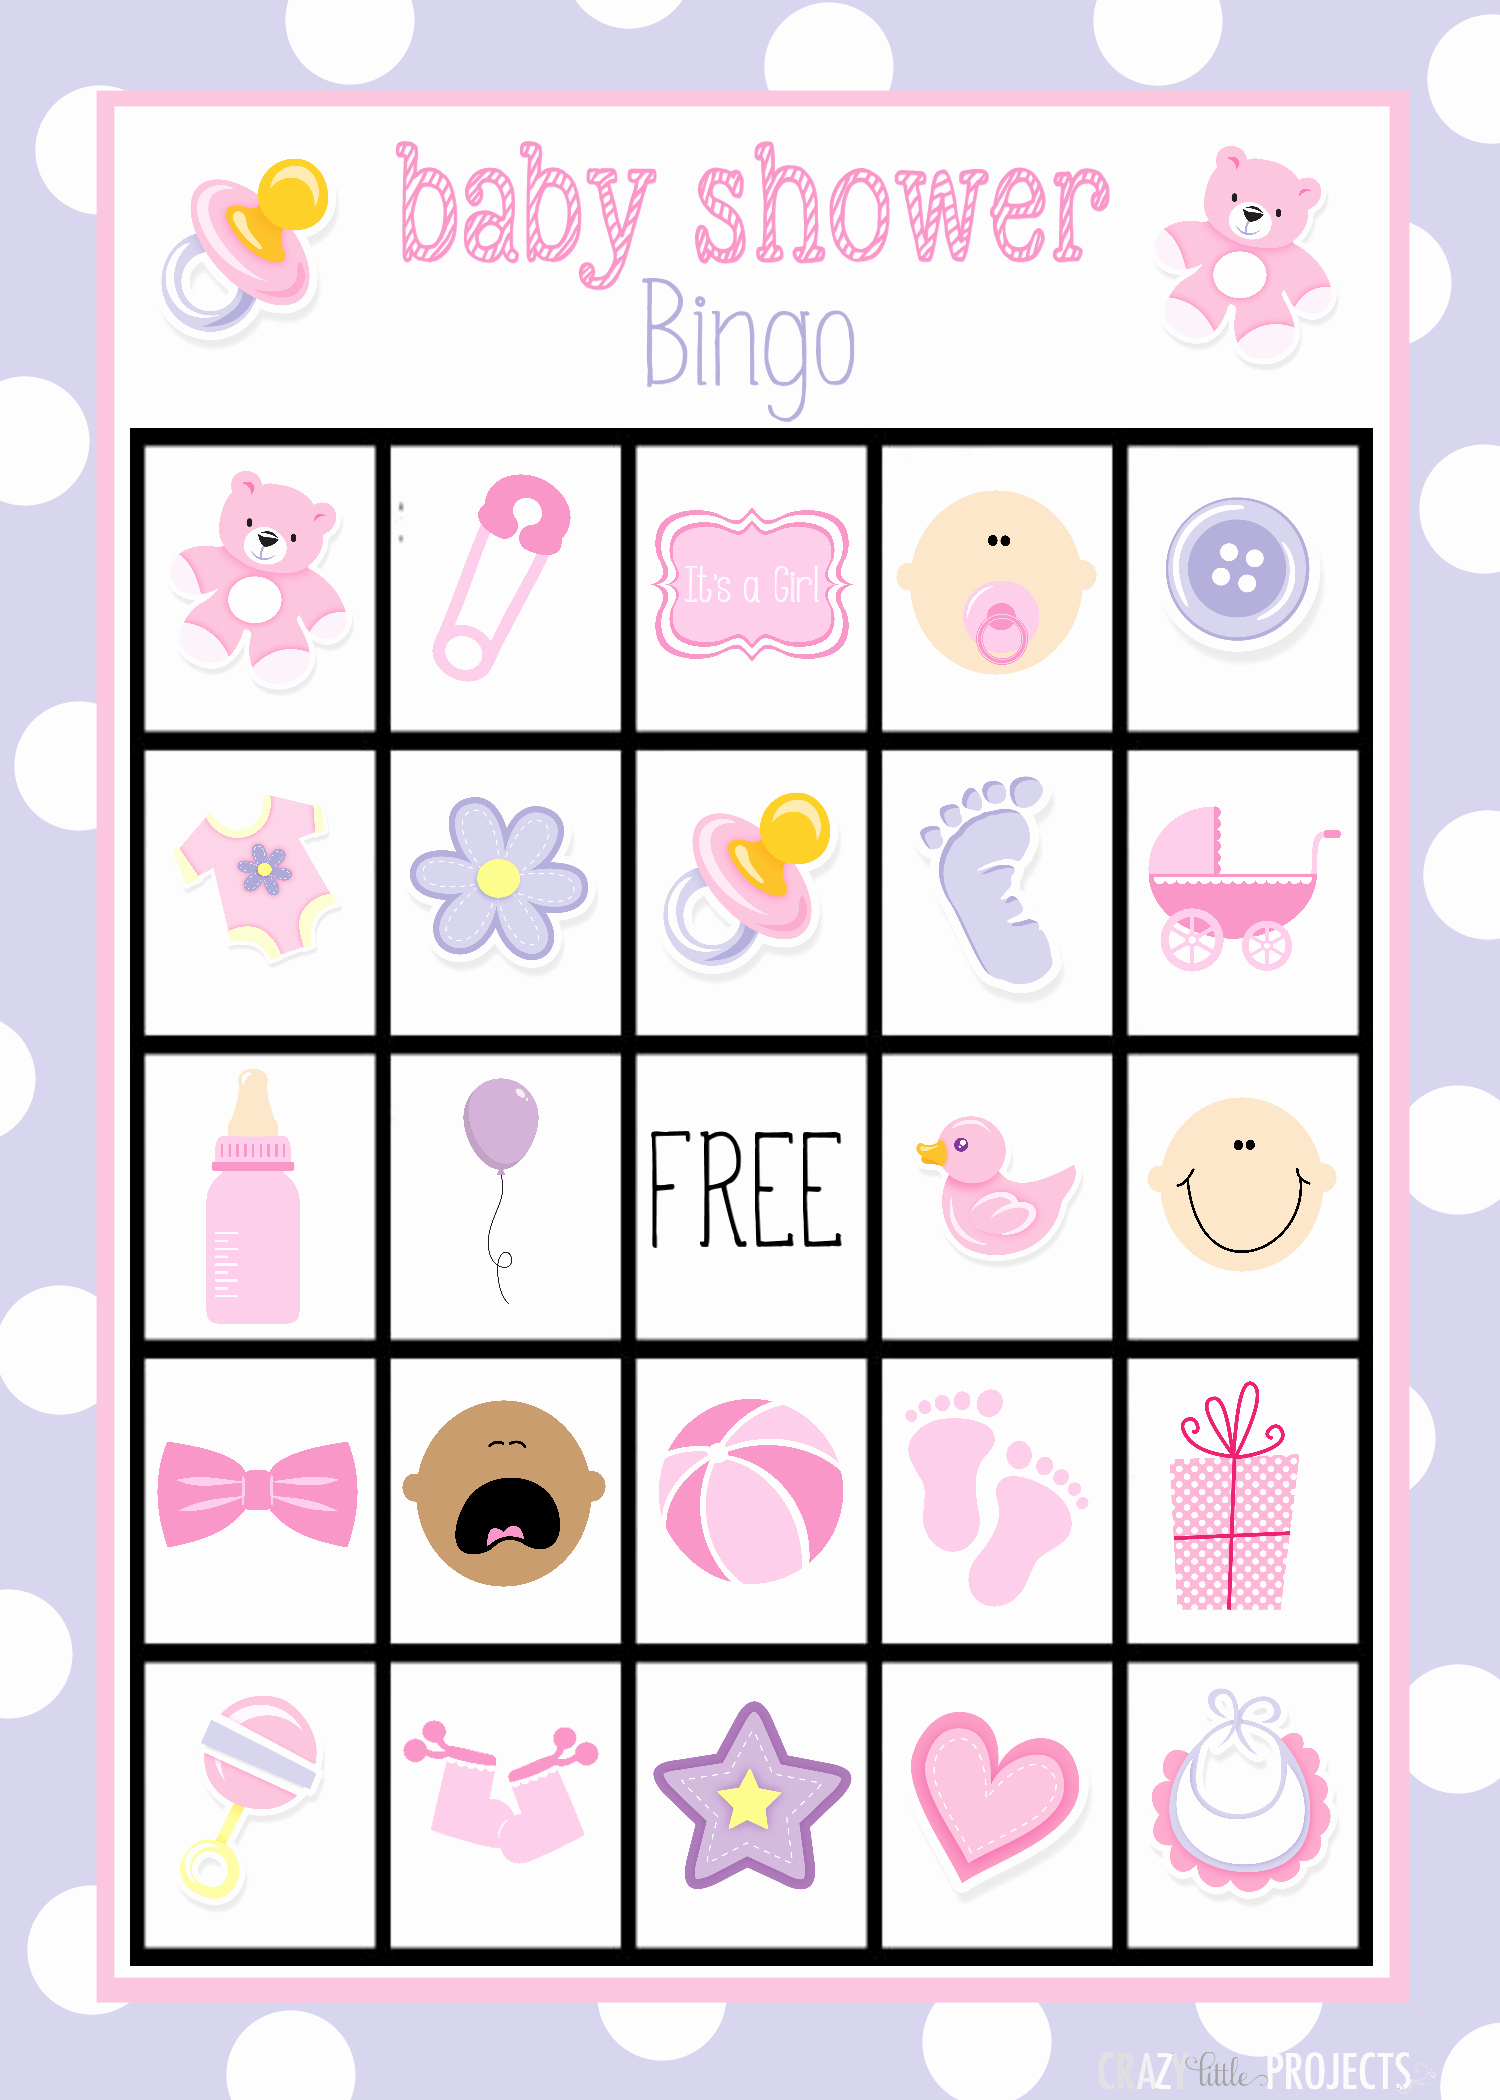 Baby Shower Card to Print Inspirational Baby Shower Bingo Cards